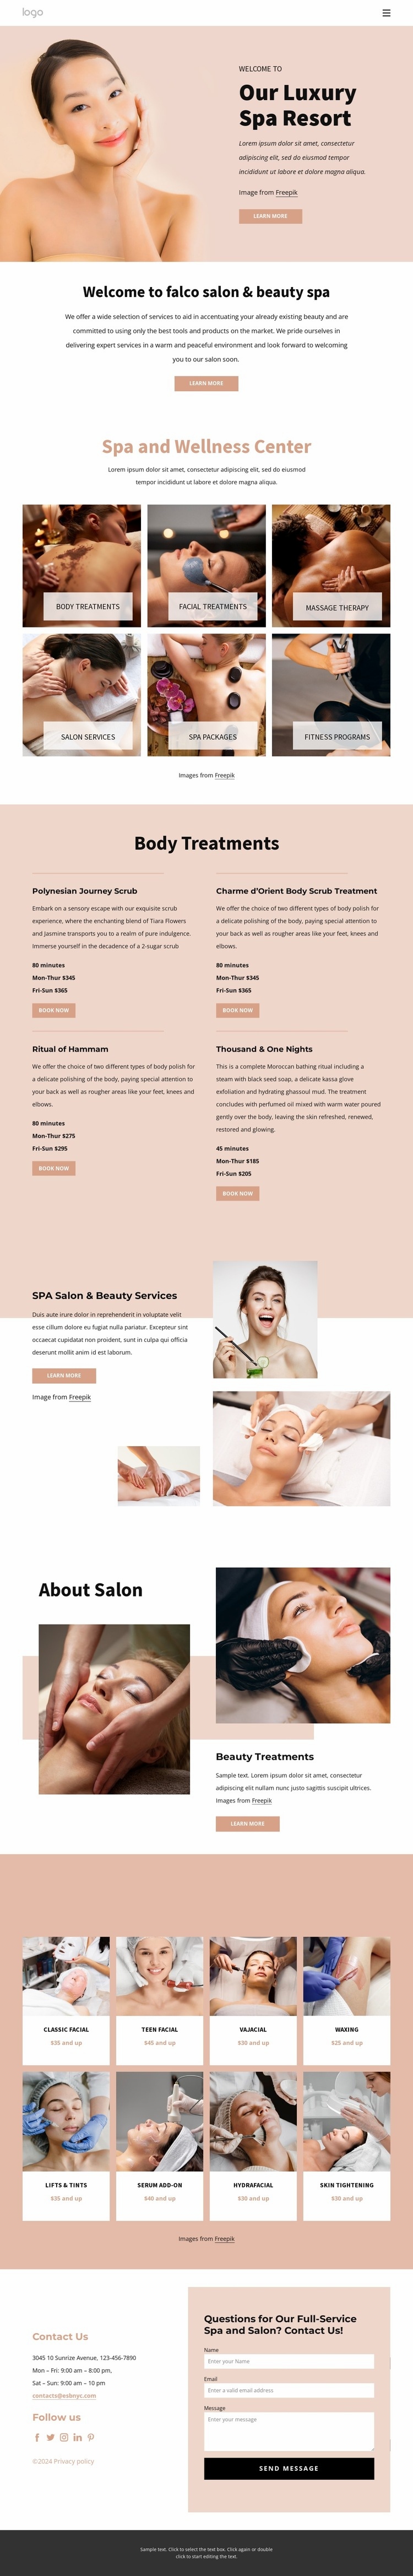 Luxury spa resort Web Page Design